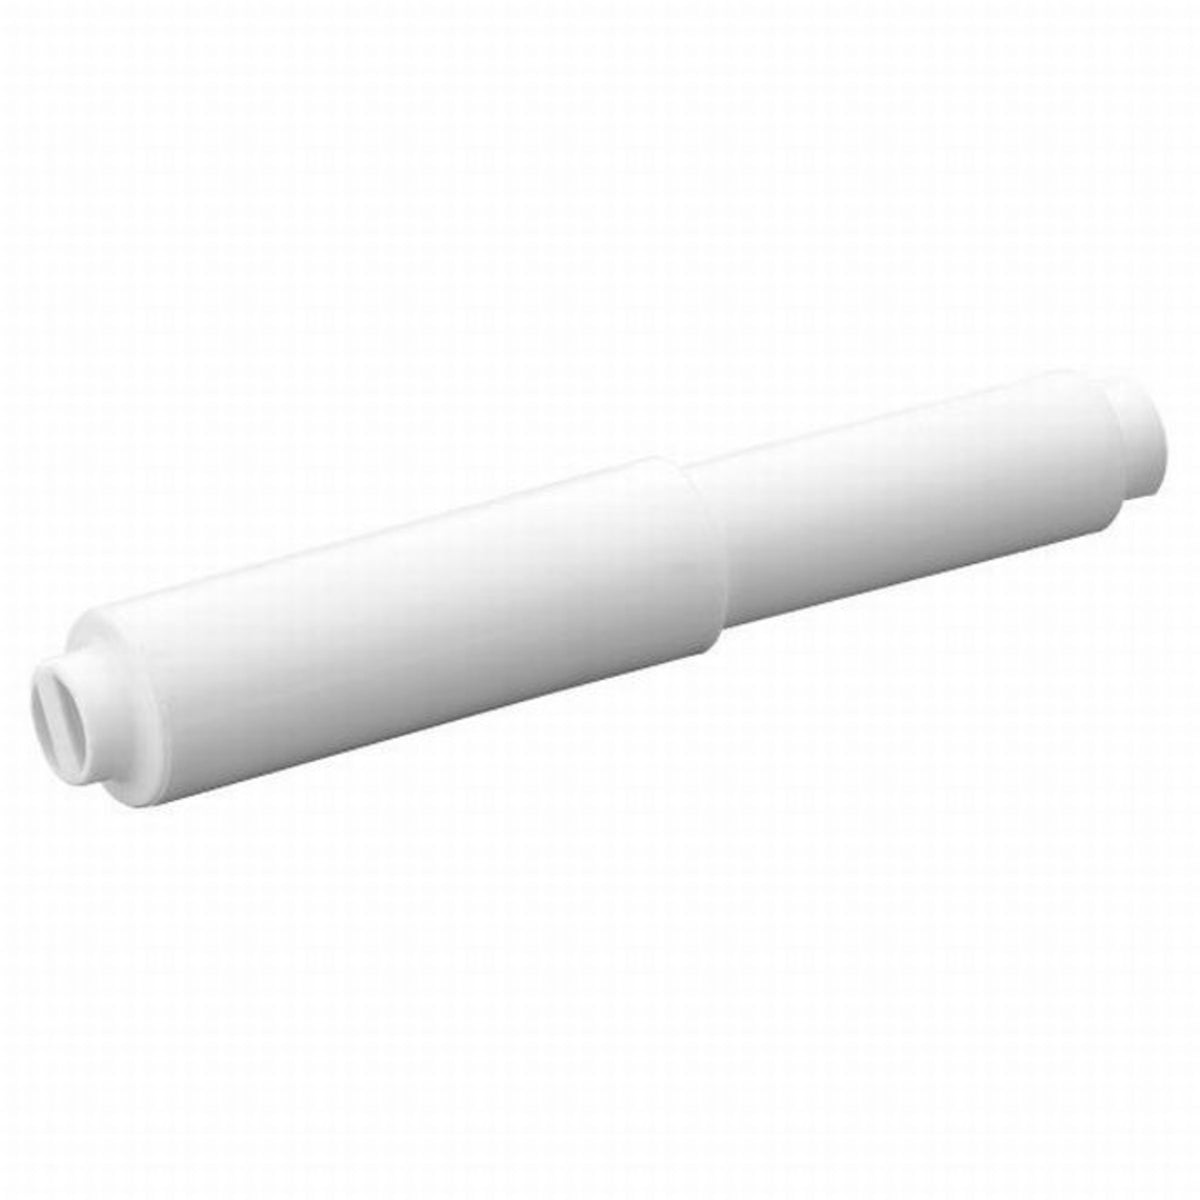 Moen 225 Contemporary Paper Holder Roller, Glacier White